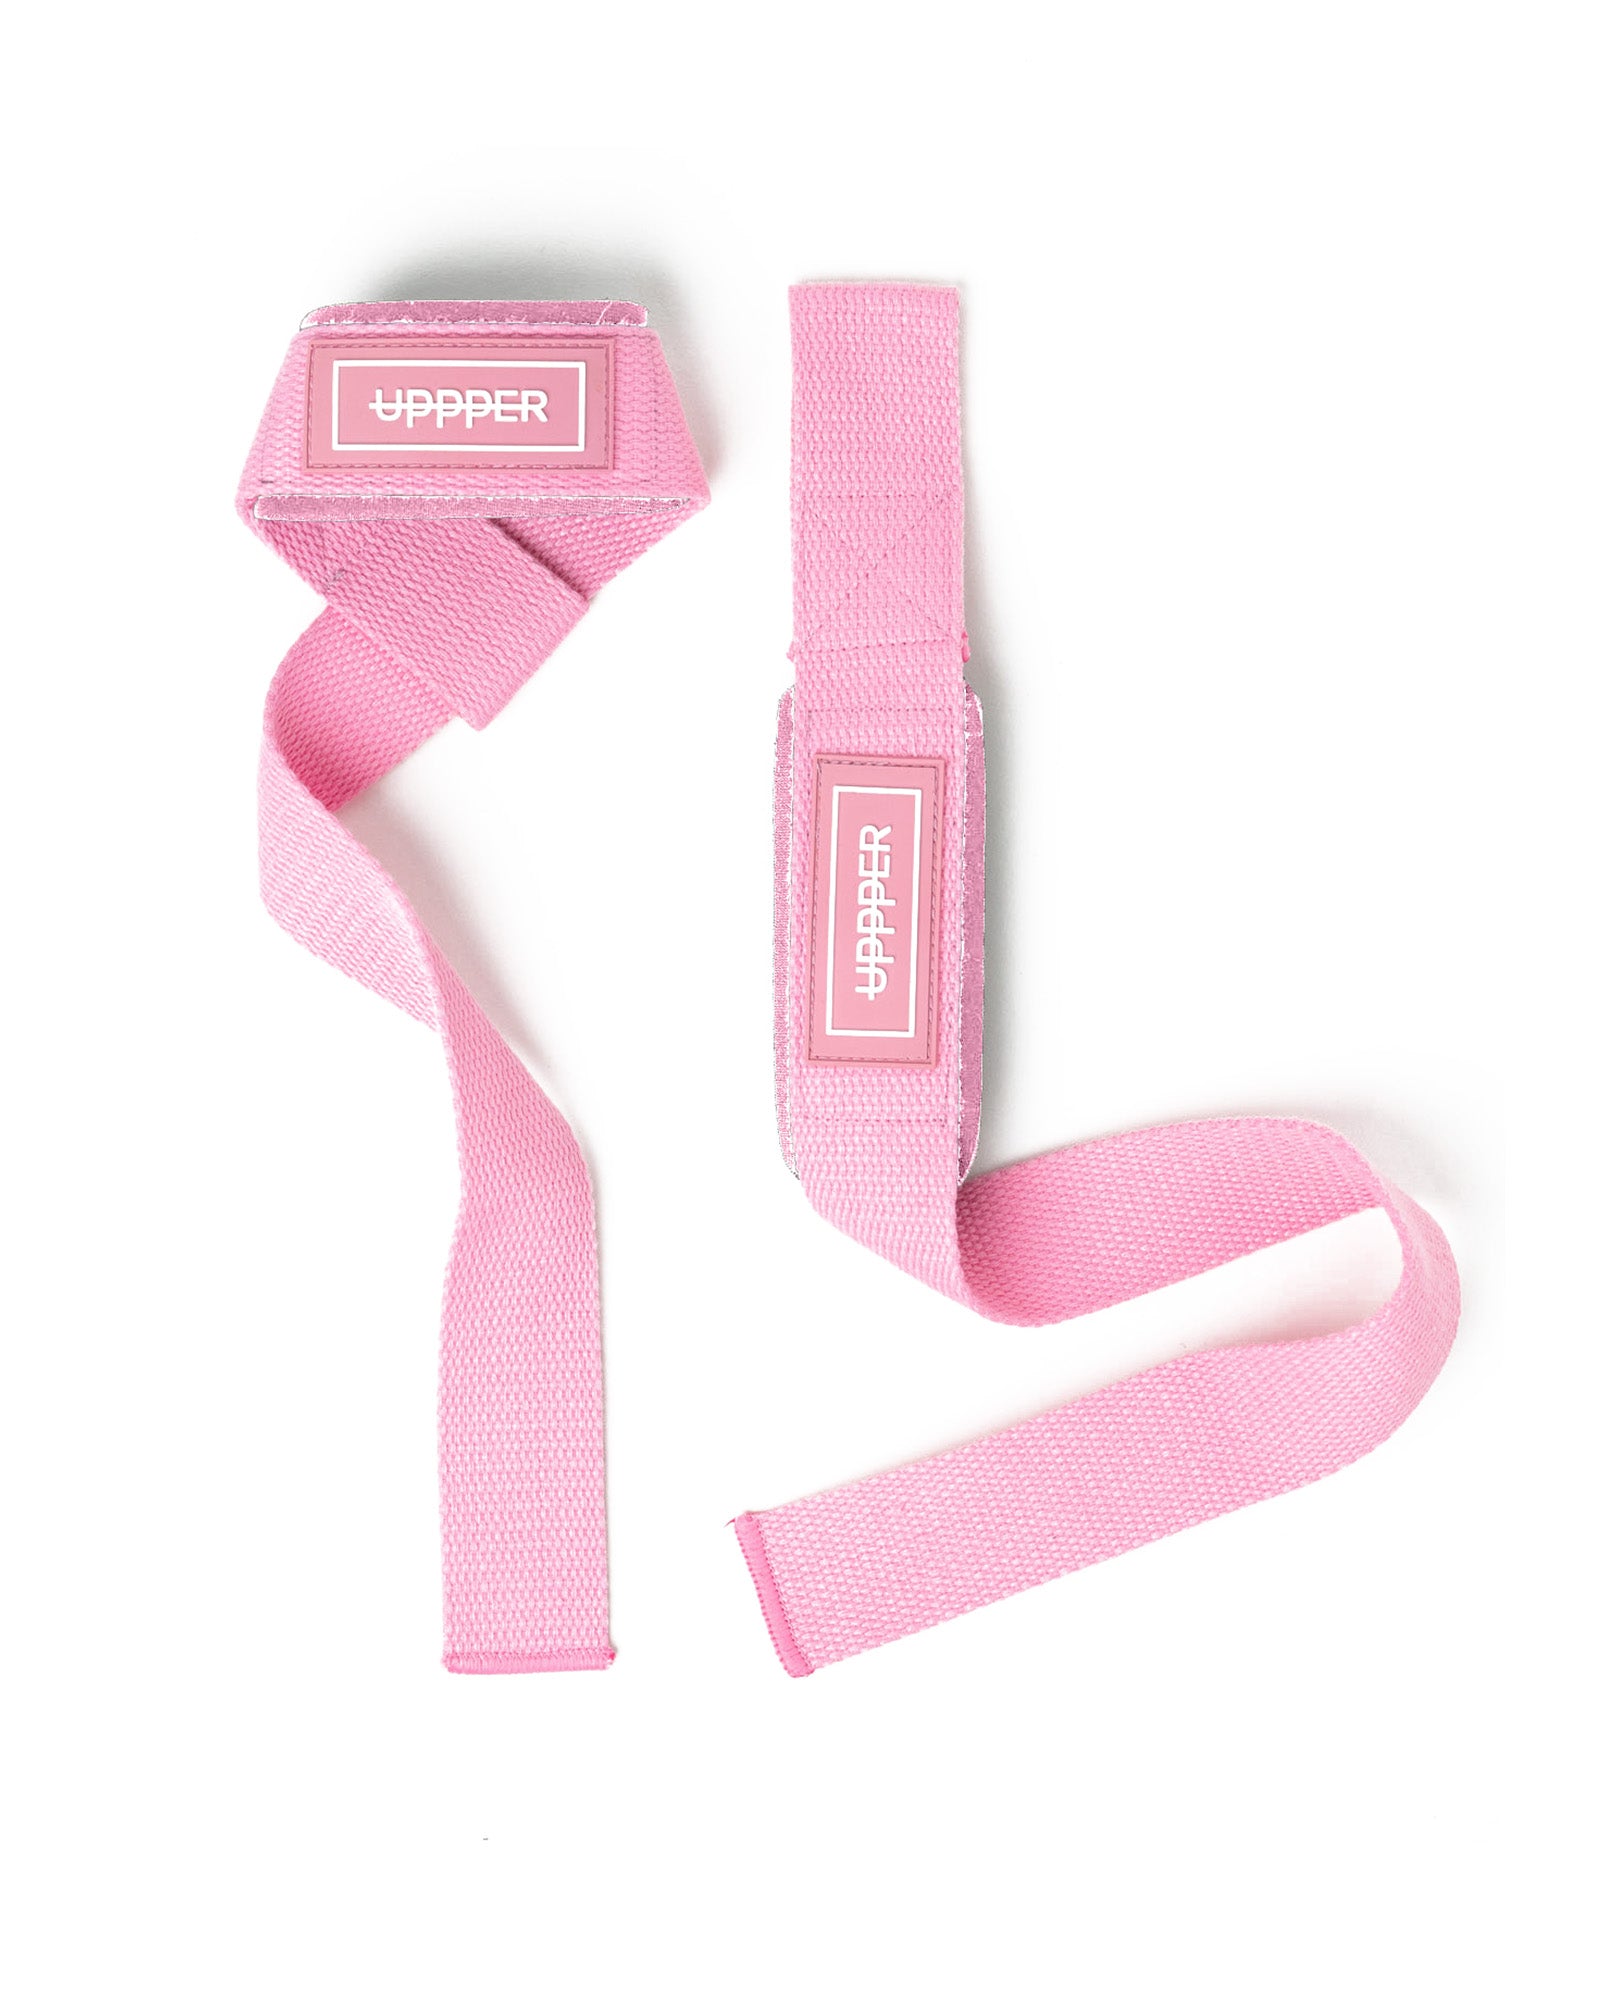 uppper lifting straps pink